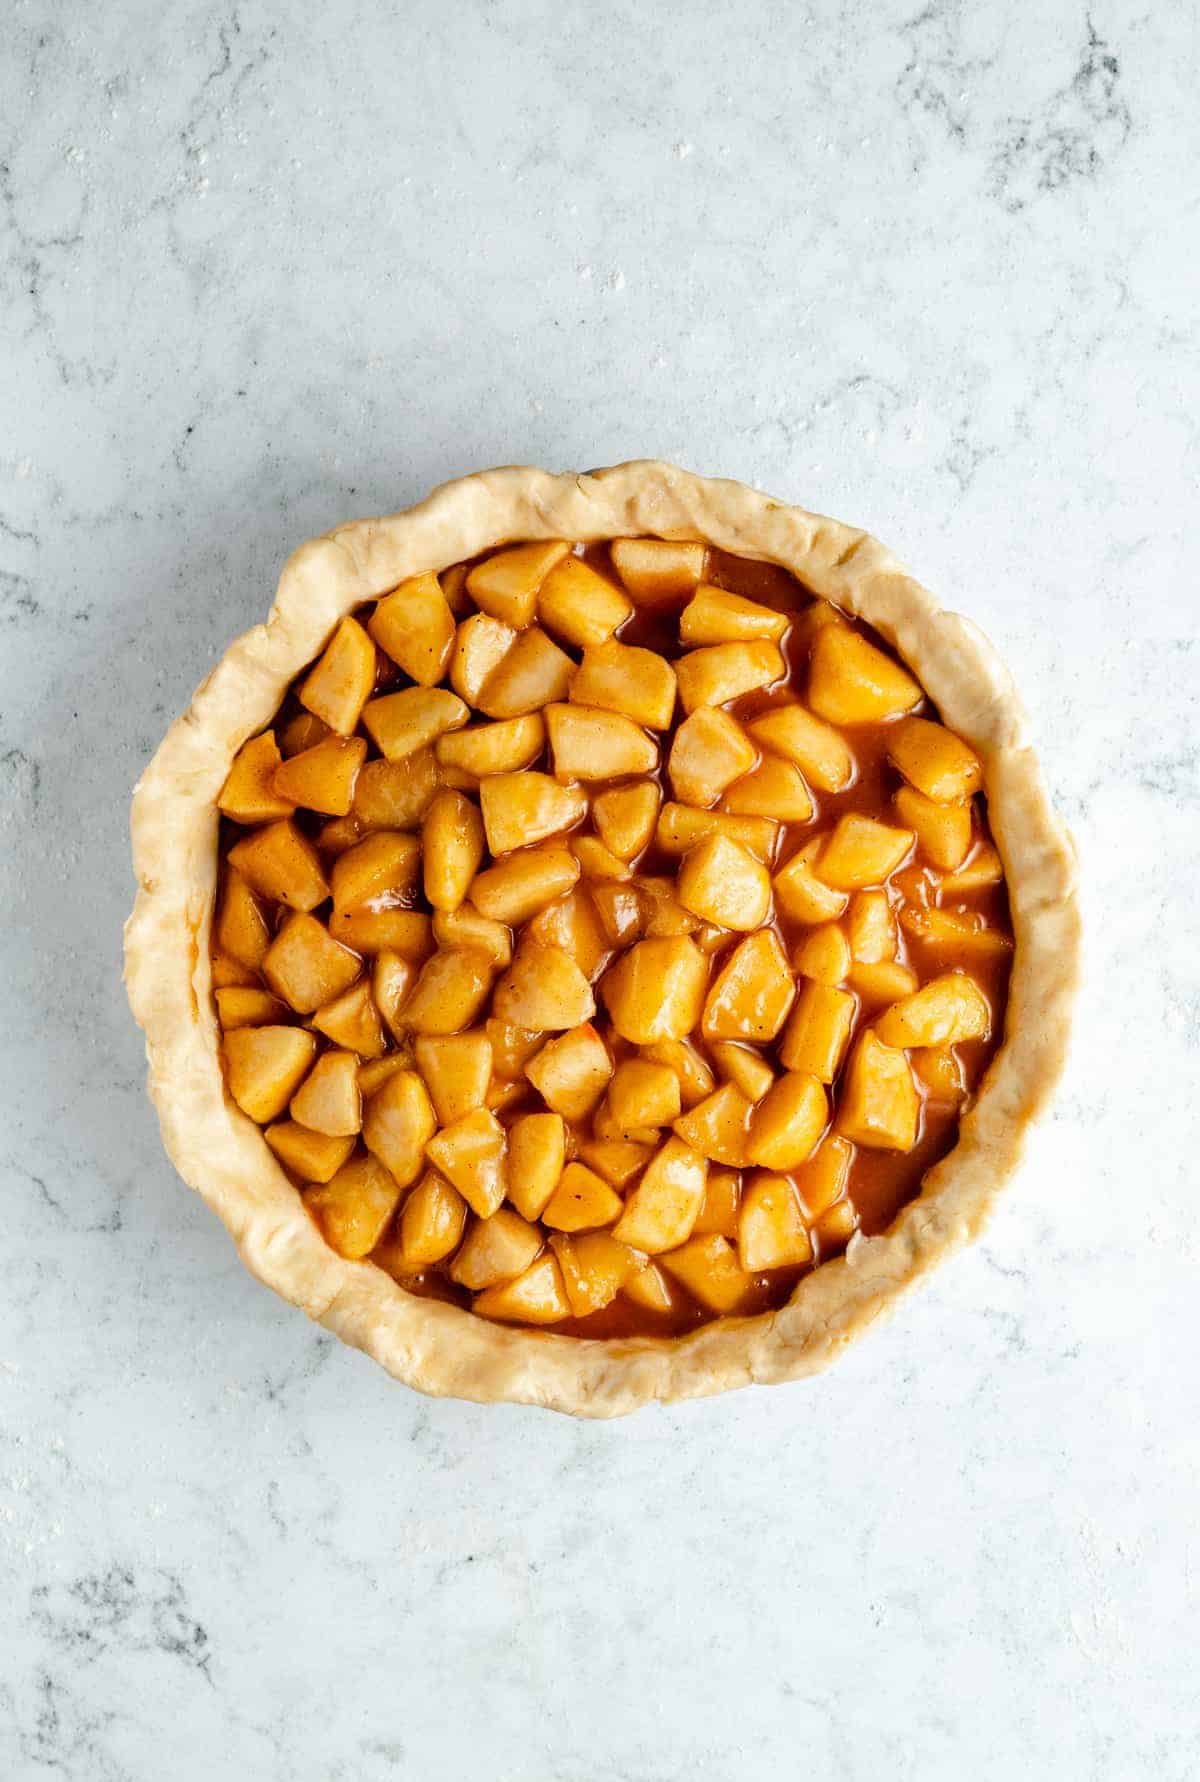 Apple pie crust filled with cinnamon-nutmeg apples.